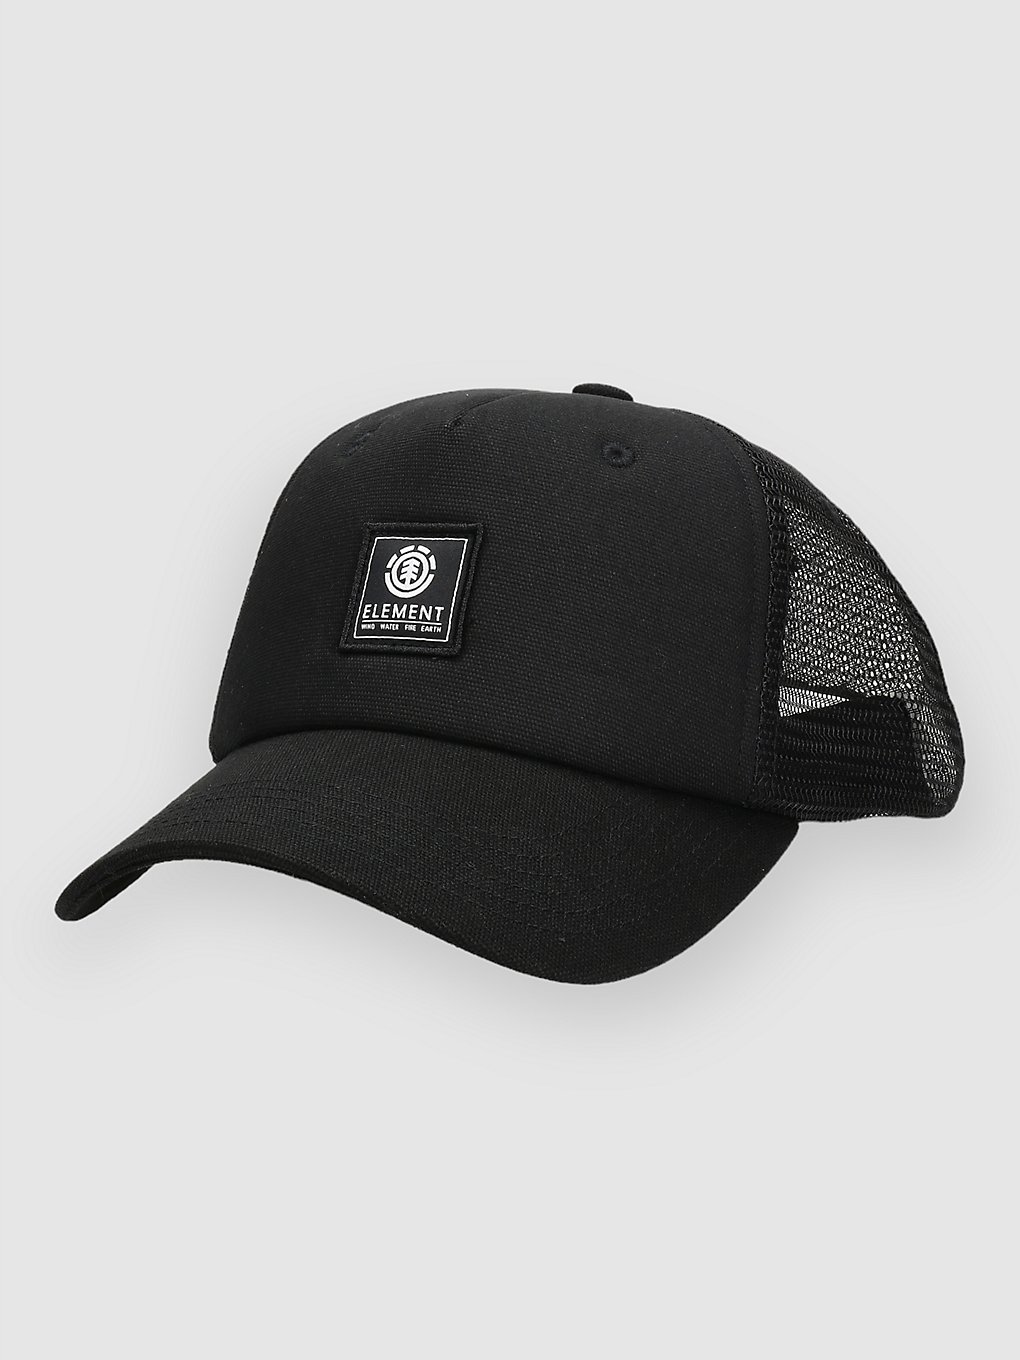 Element Icon Mesh Cap all black kaufen